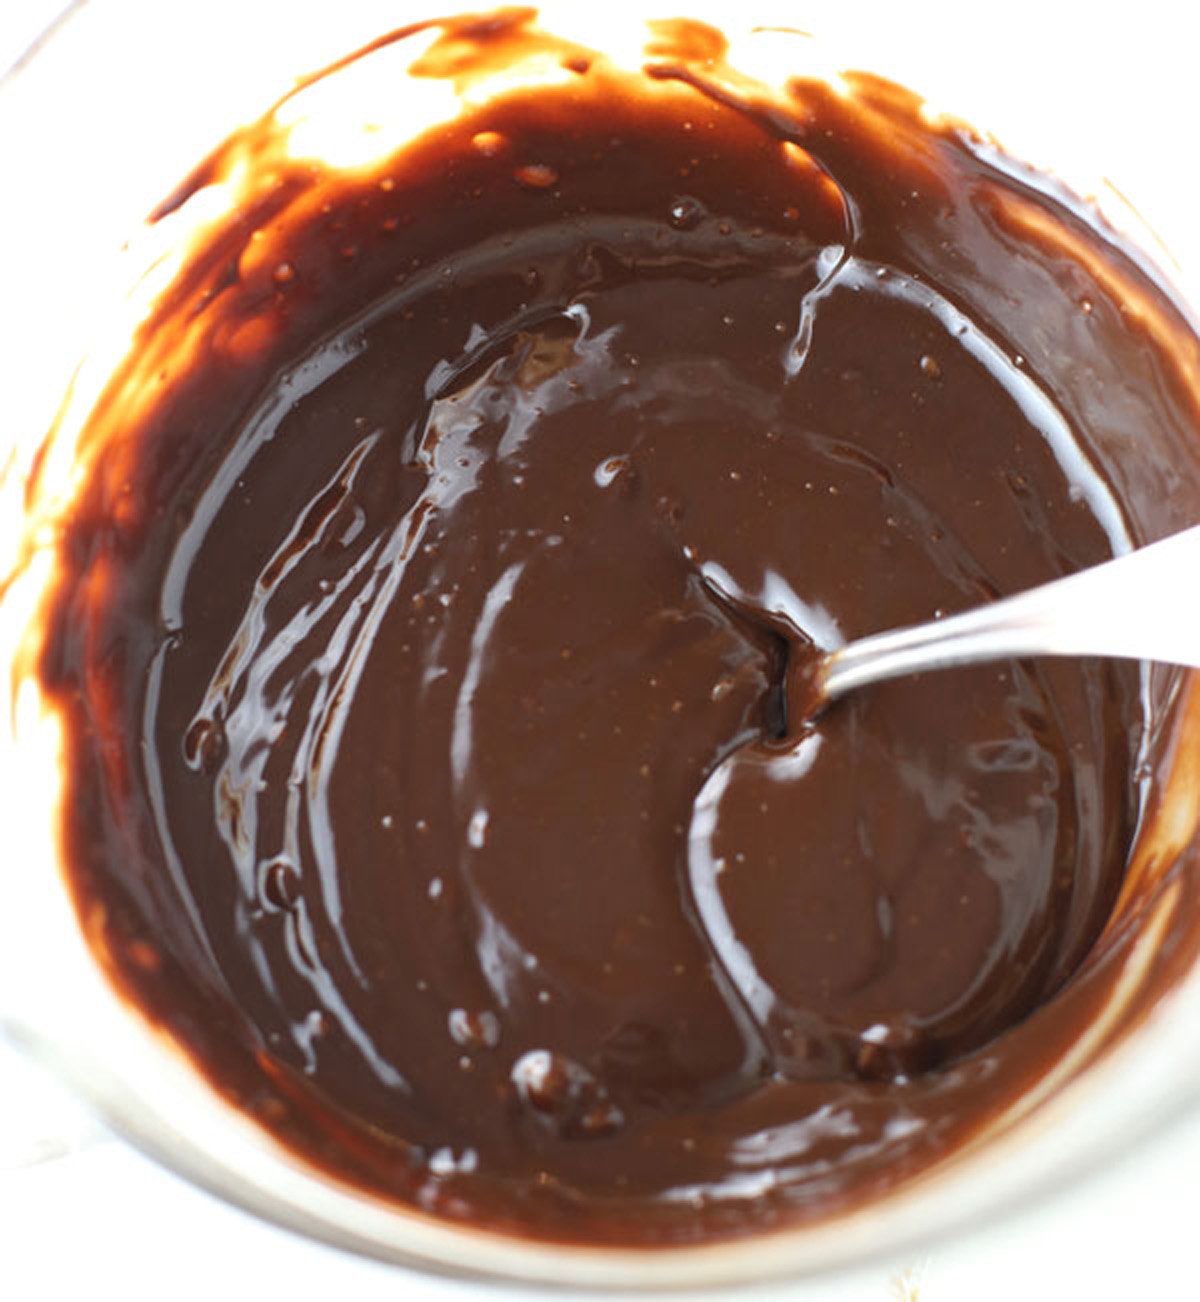 Chocolate ganache in a bowl.